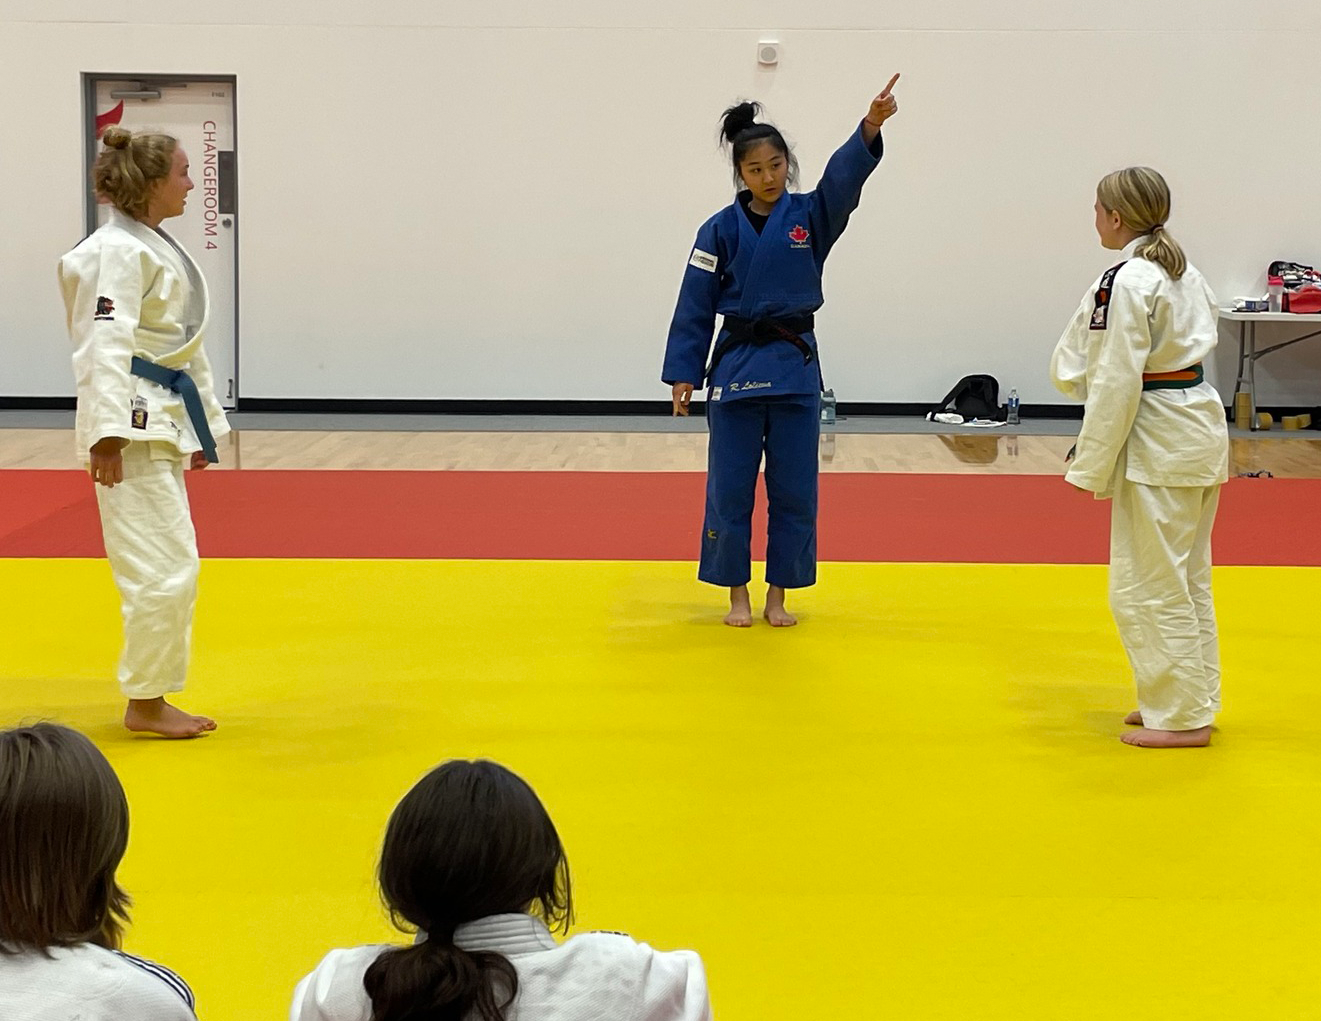 Arbitrage Feminin : trois judokas sur le tatamis en formation